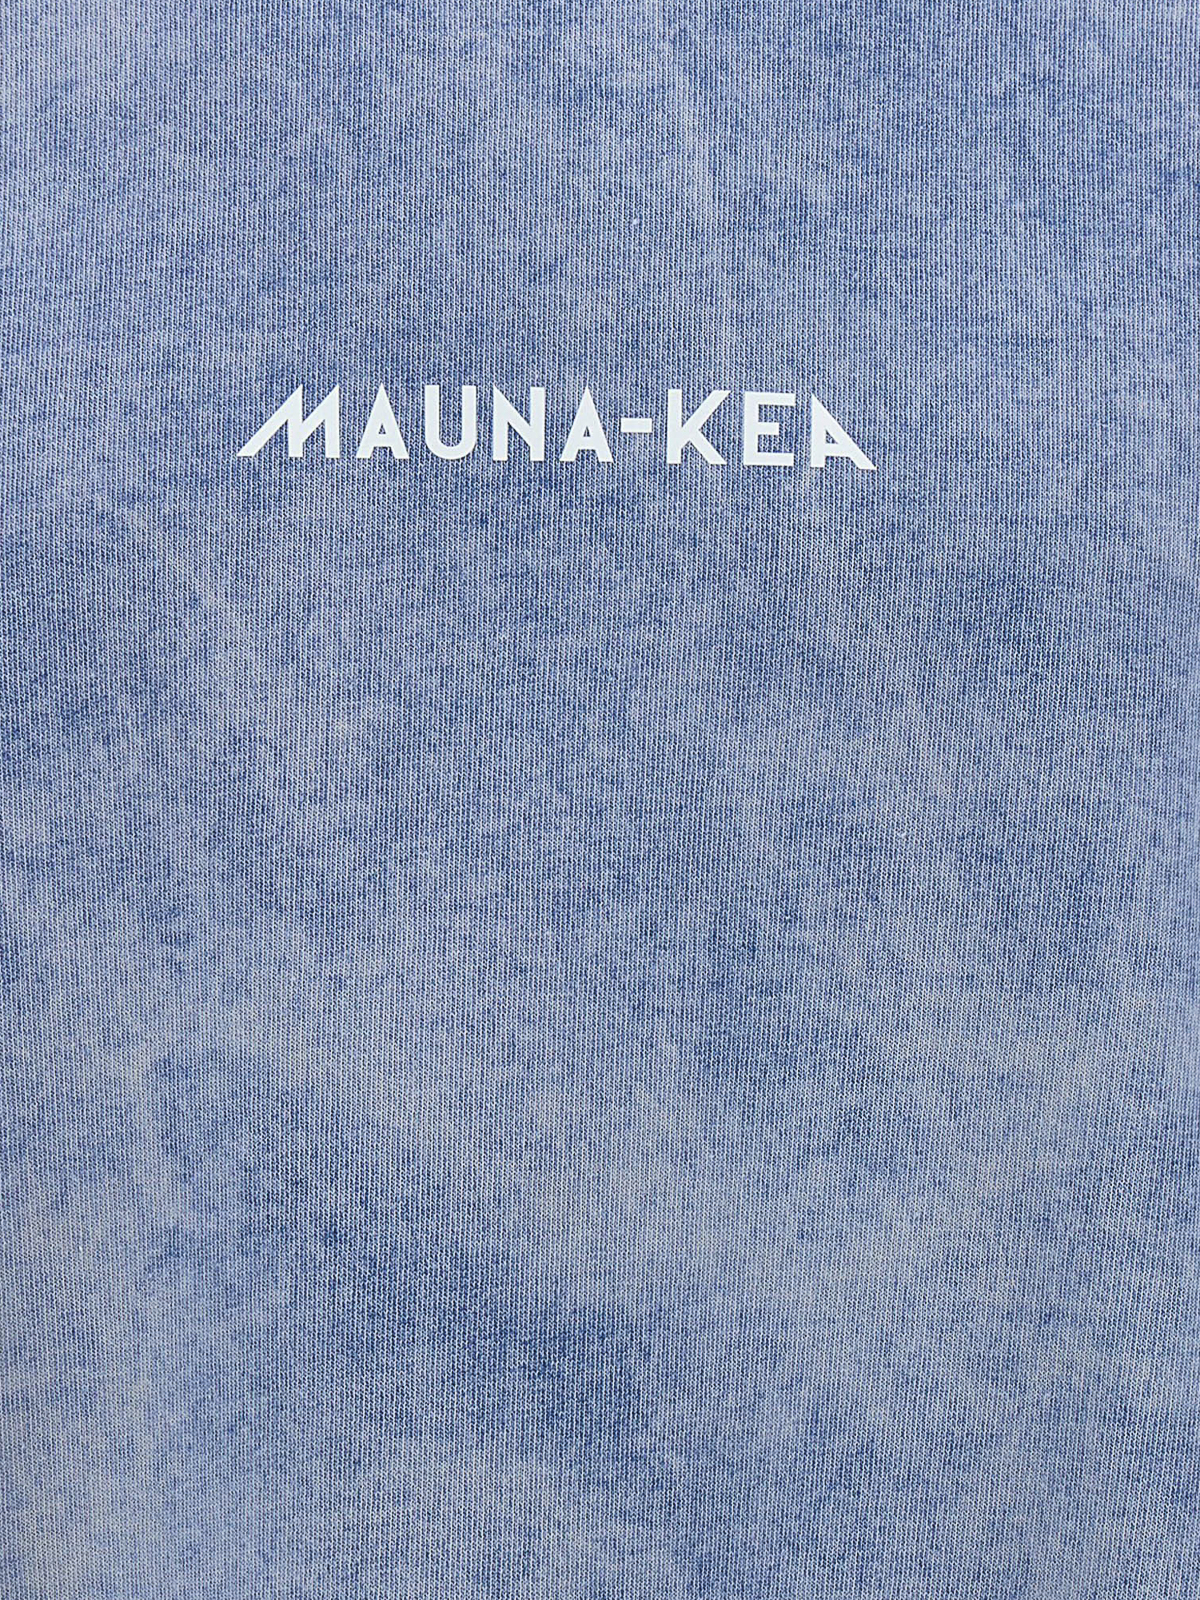 Shop Mauna Kea Logo Sweatshirt In Light Blue